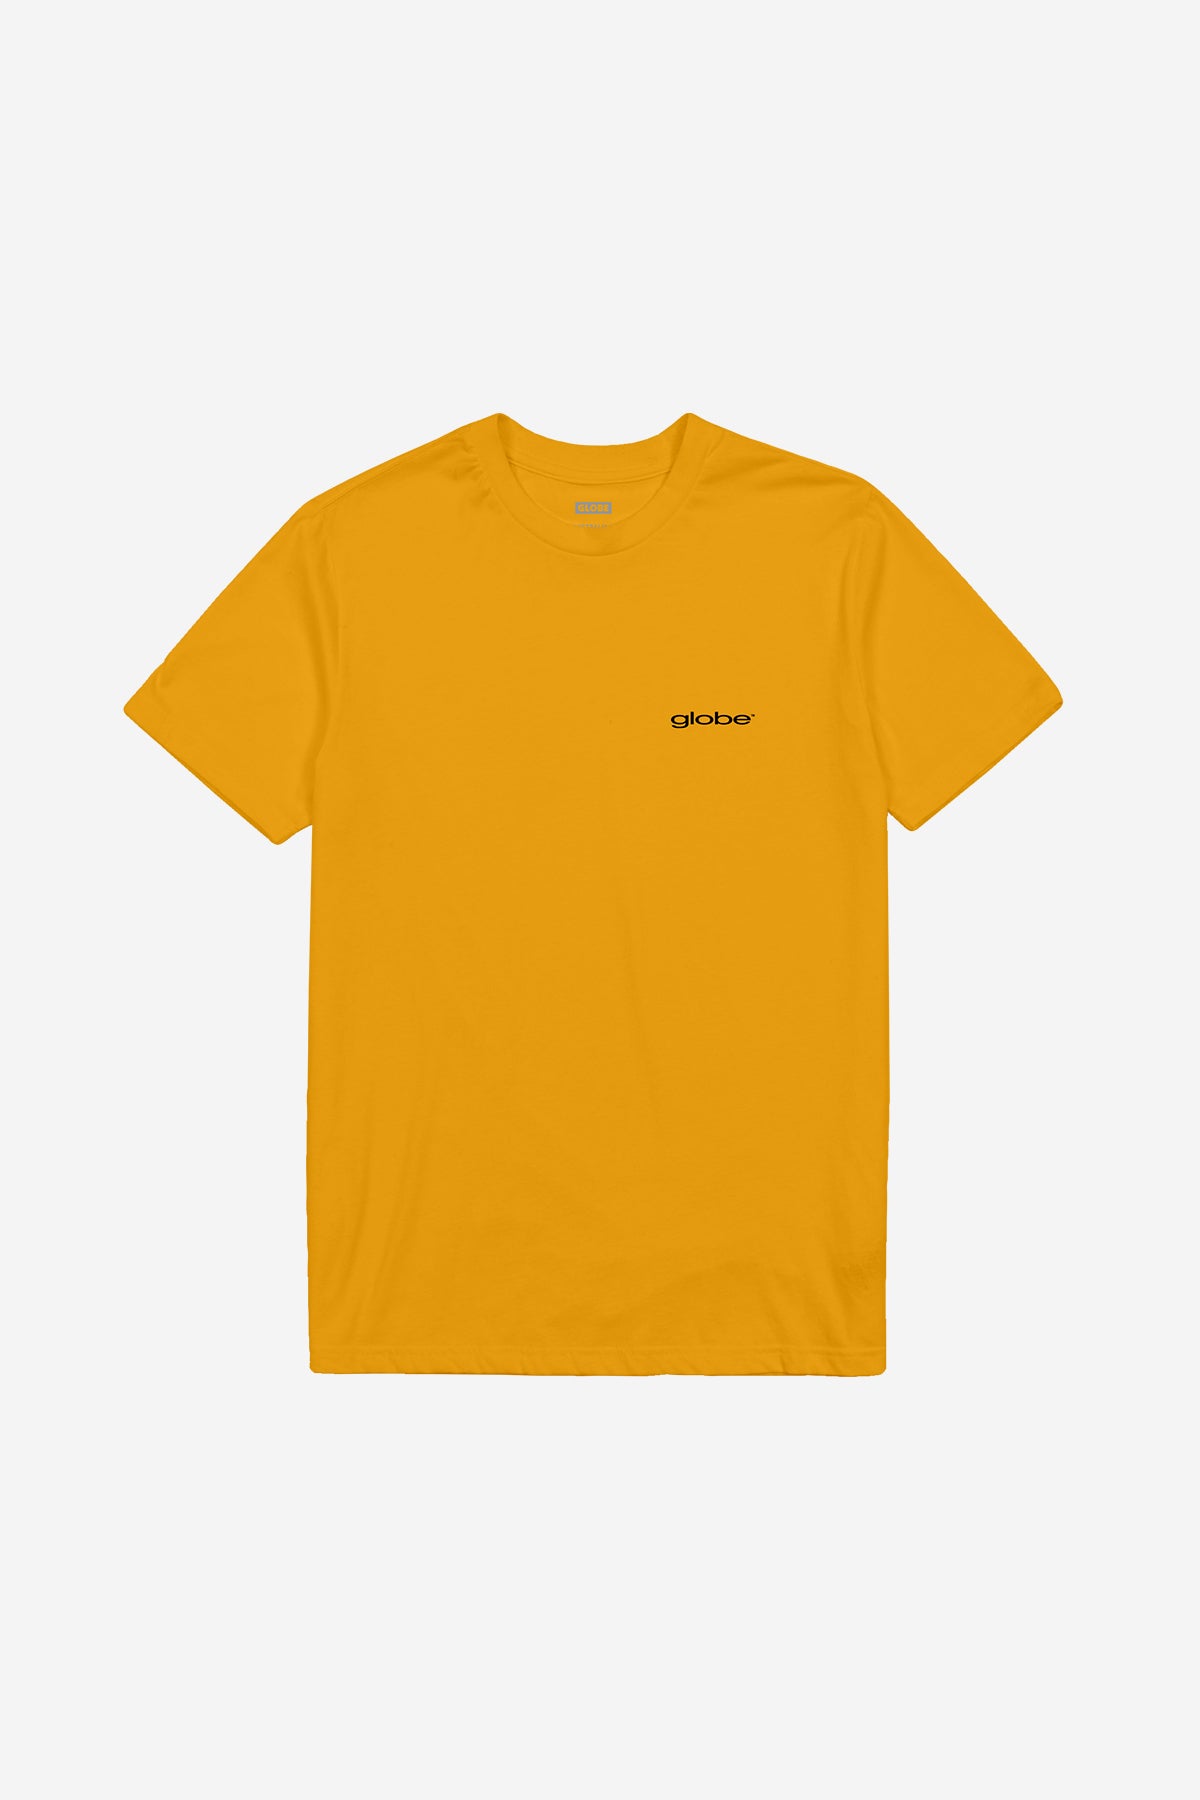 Globe - T-shirt ovale - Agrumes